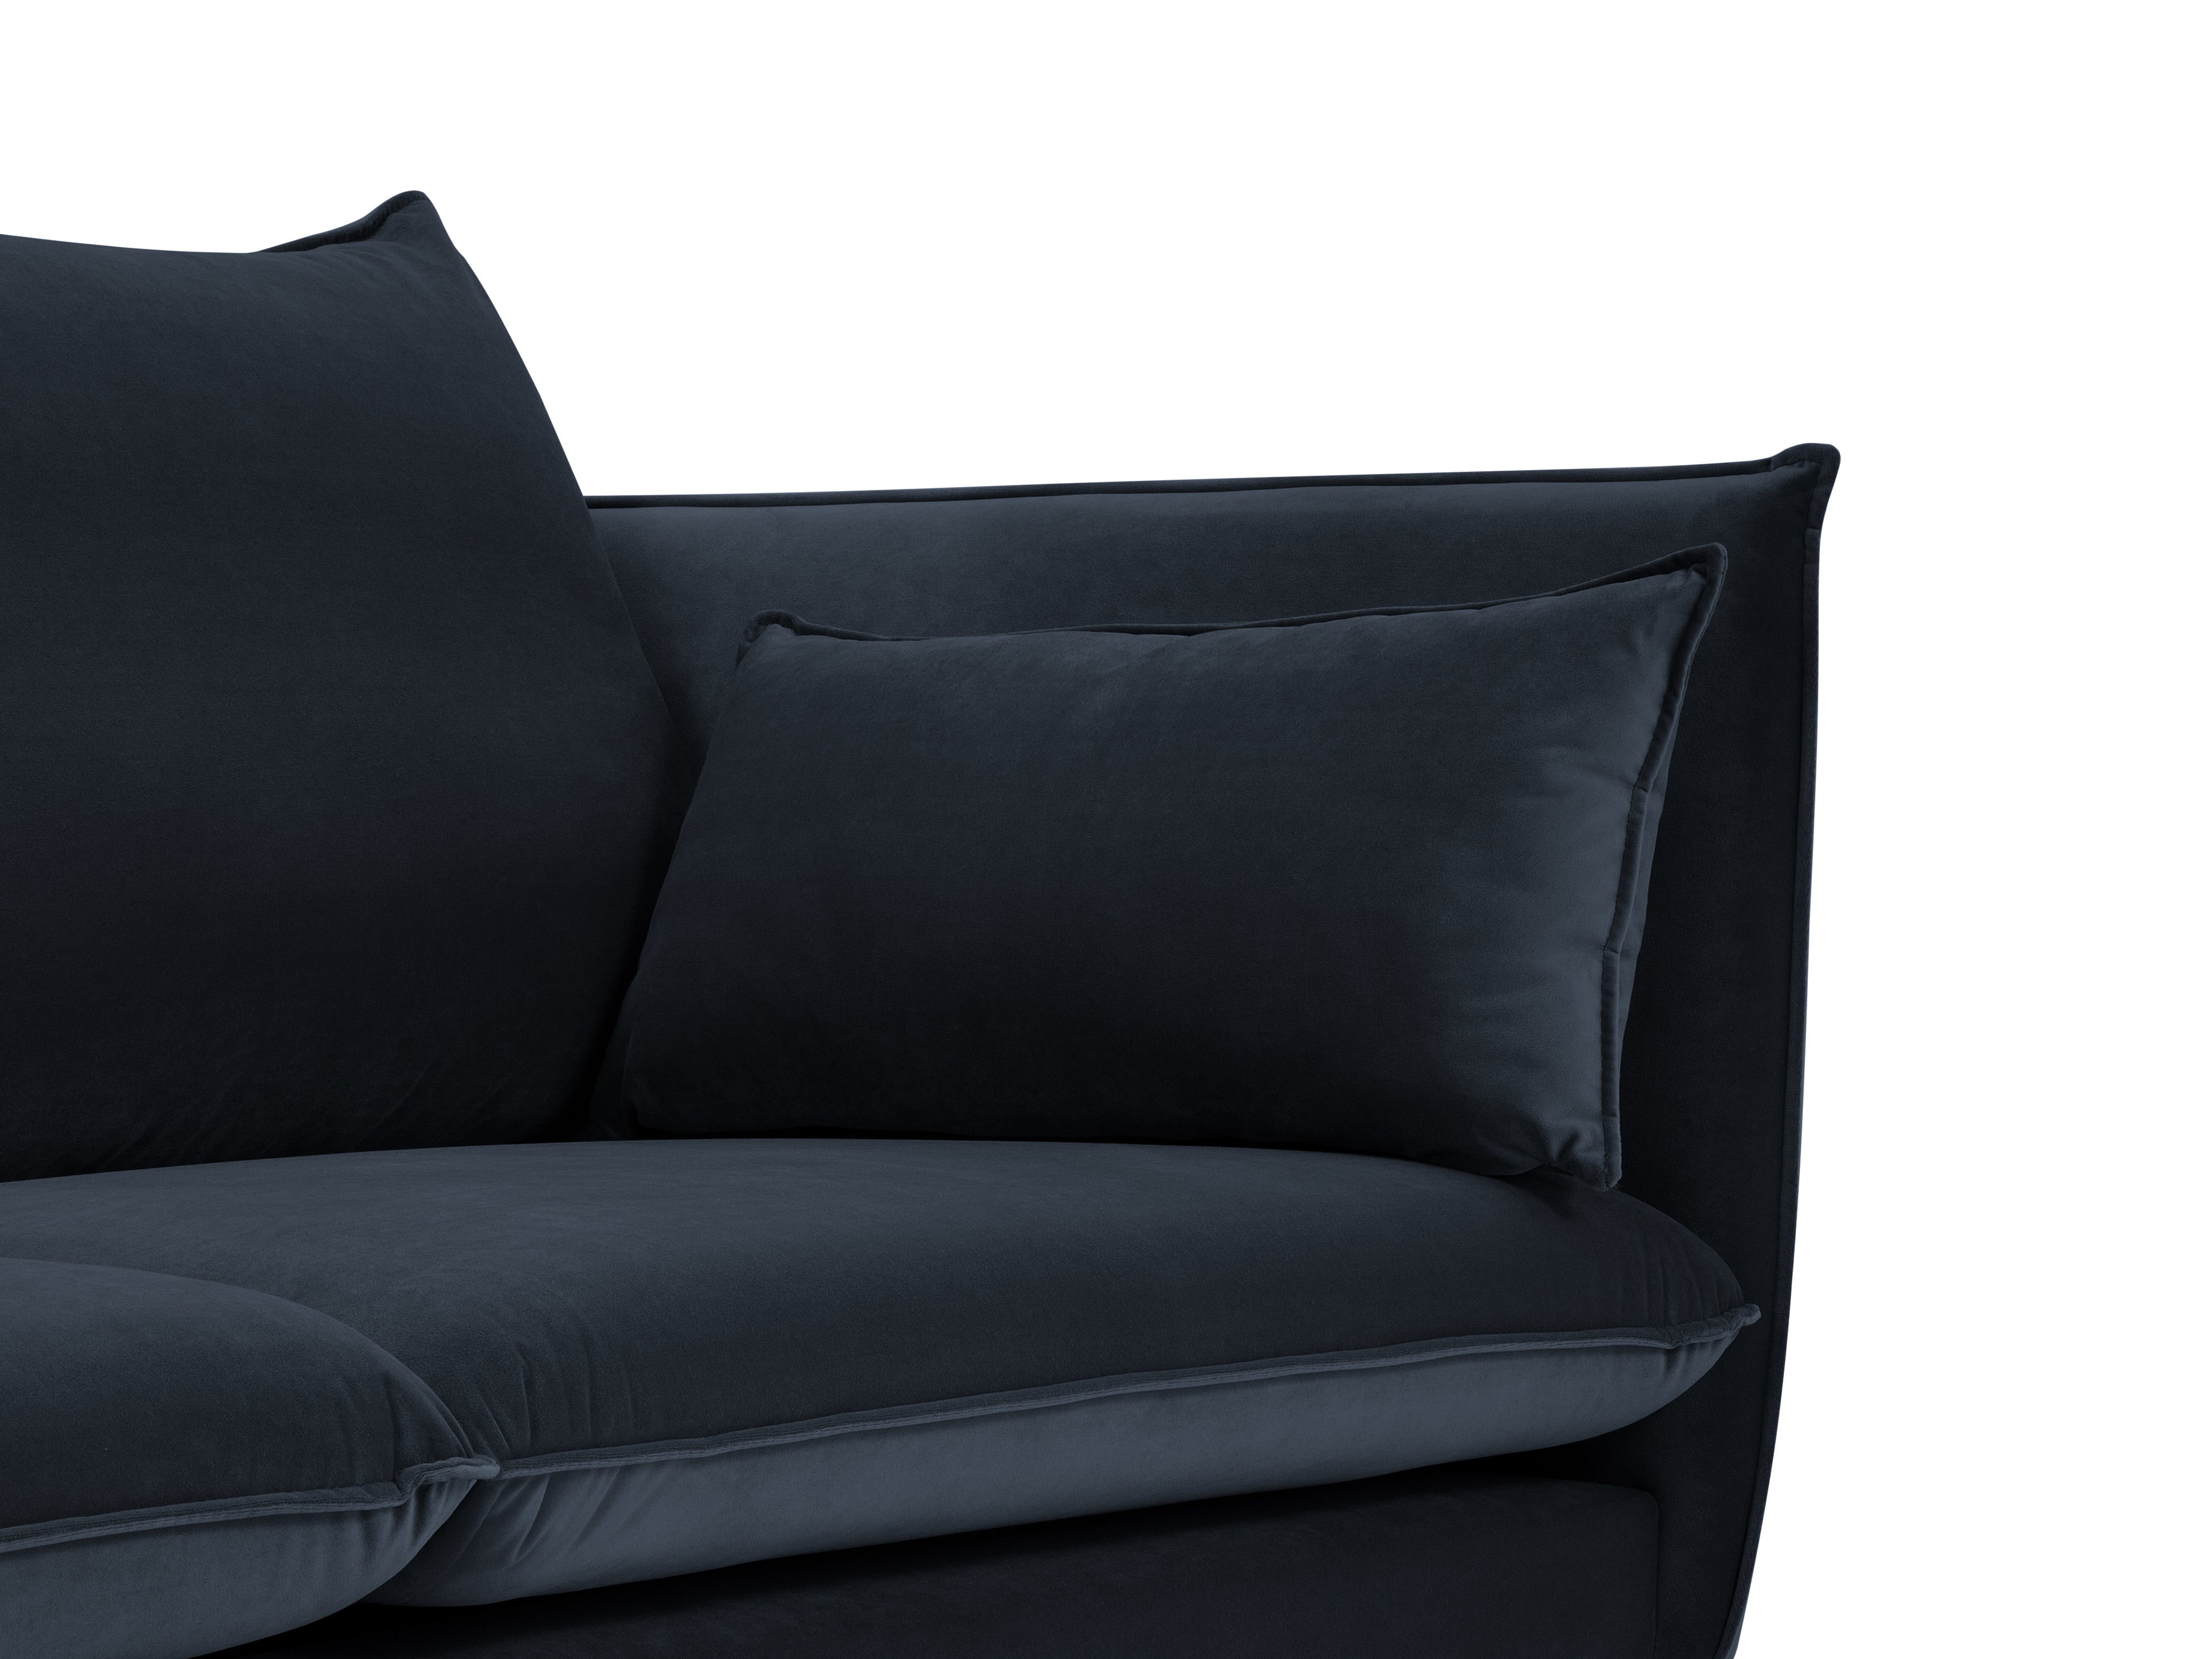 2-person velvet sofa with pillows